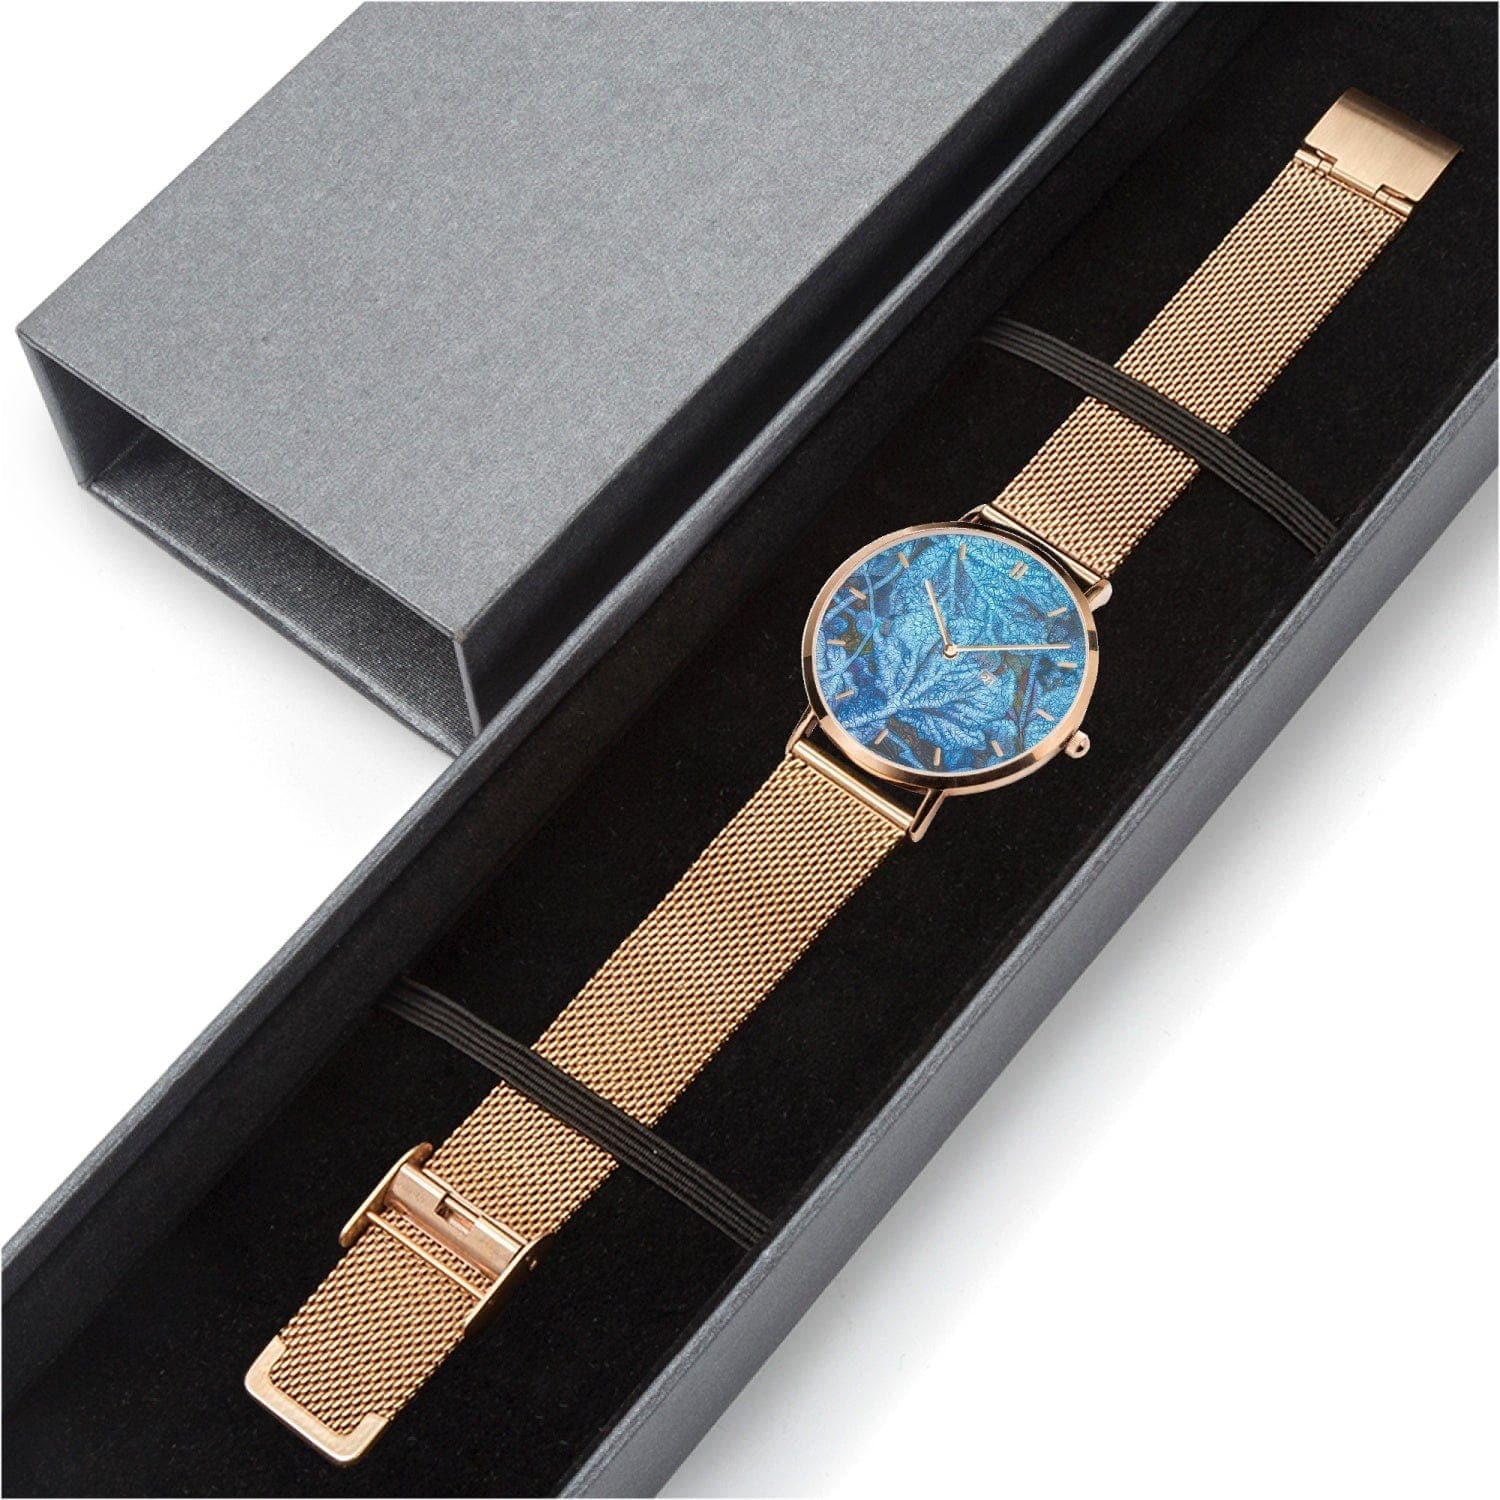 Frozen blue leafs. Stainless Steel Perpetual Calendar Quartz Watch (With Indicators), by Sensus Studio Design